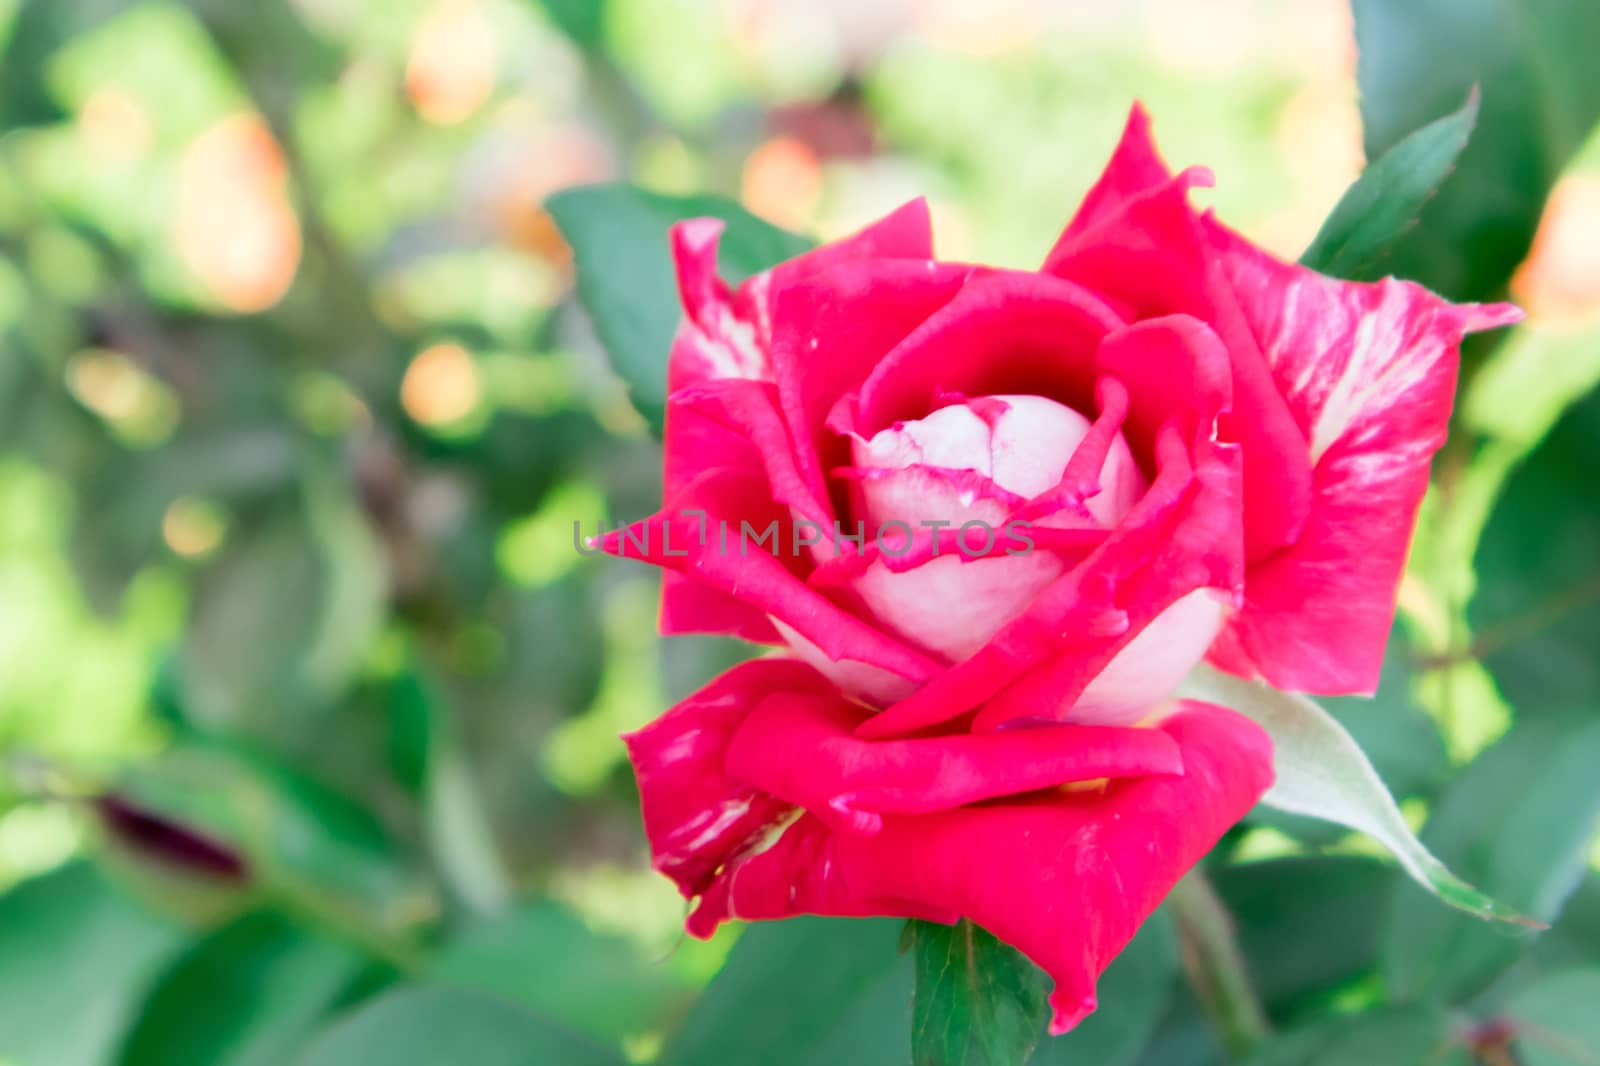 Closeup beautiful red rose in garden, selective focus by pt.pongsak@gmail.com